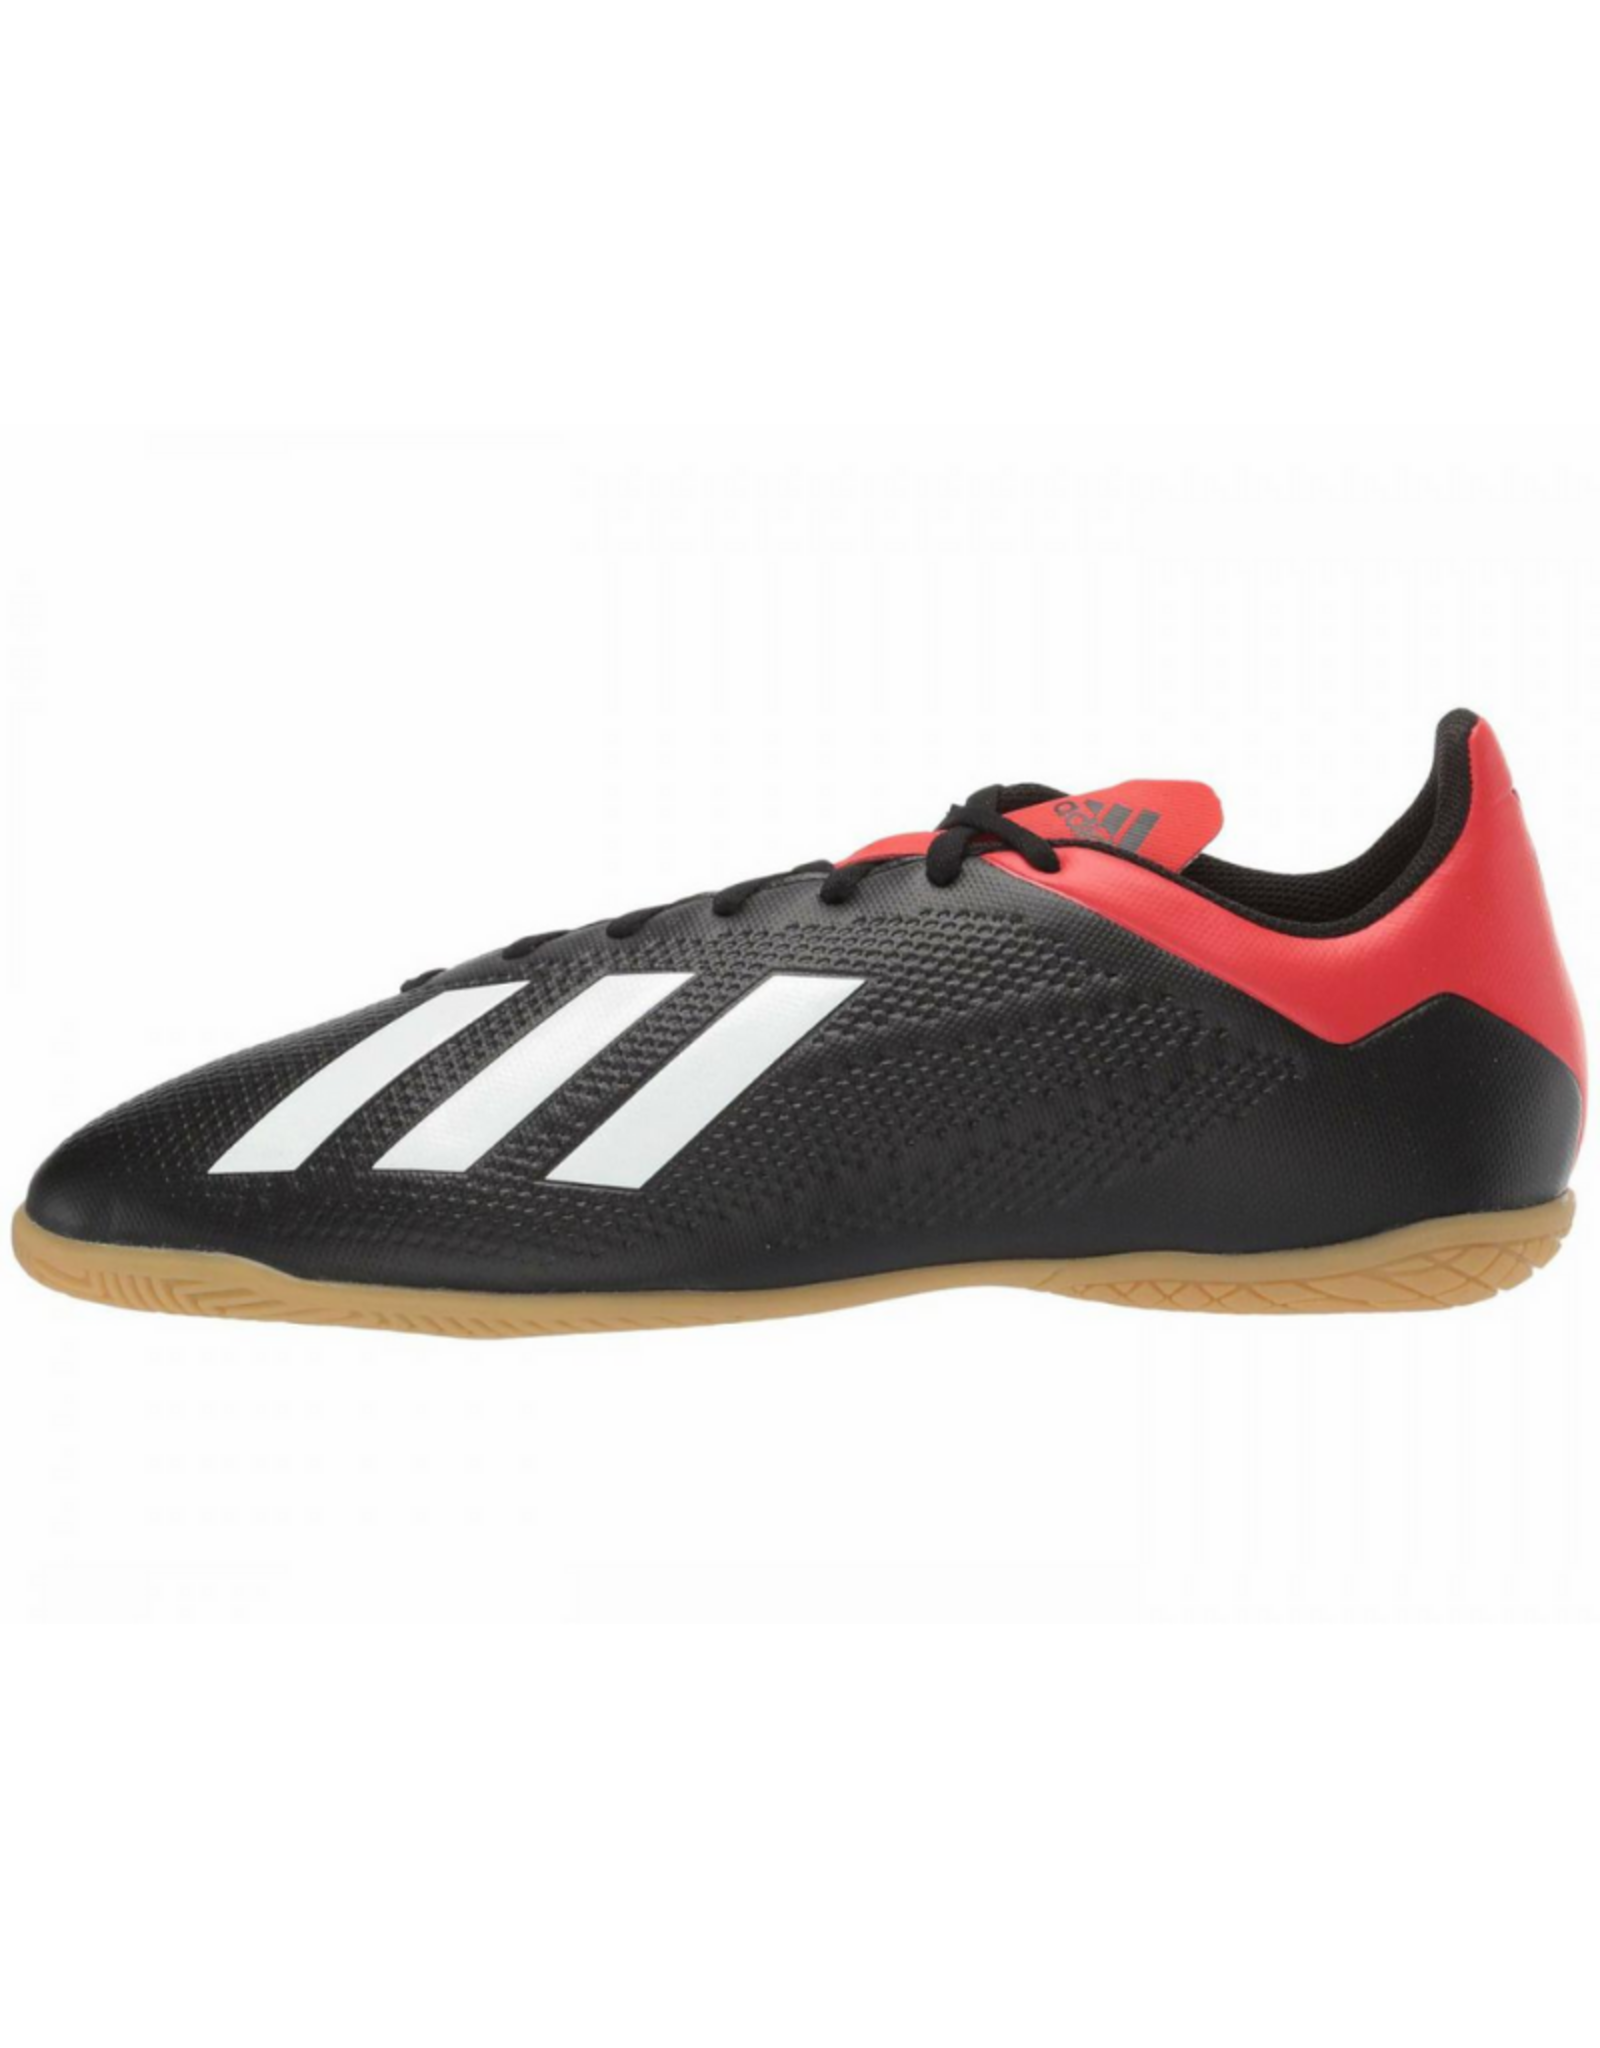 Adidas Adidas Men's  X 18.4 Indoor Court Shoes Black/Red